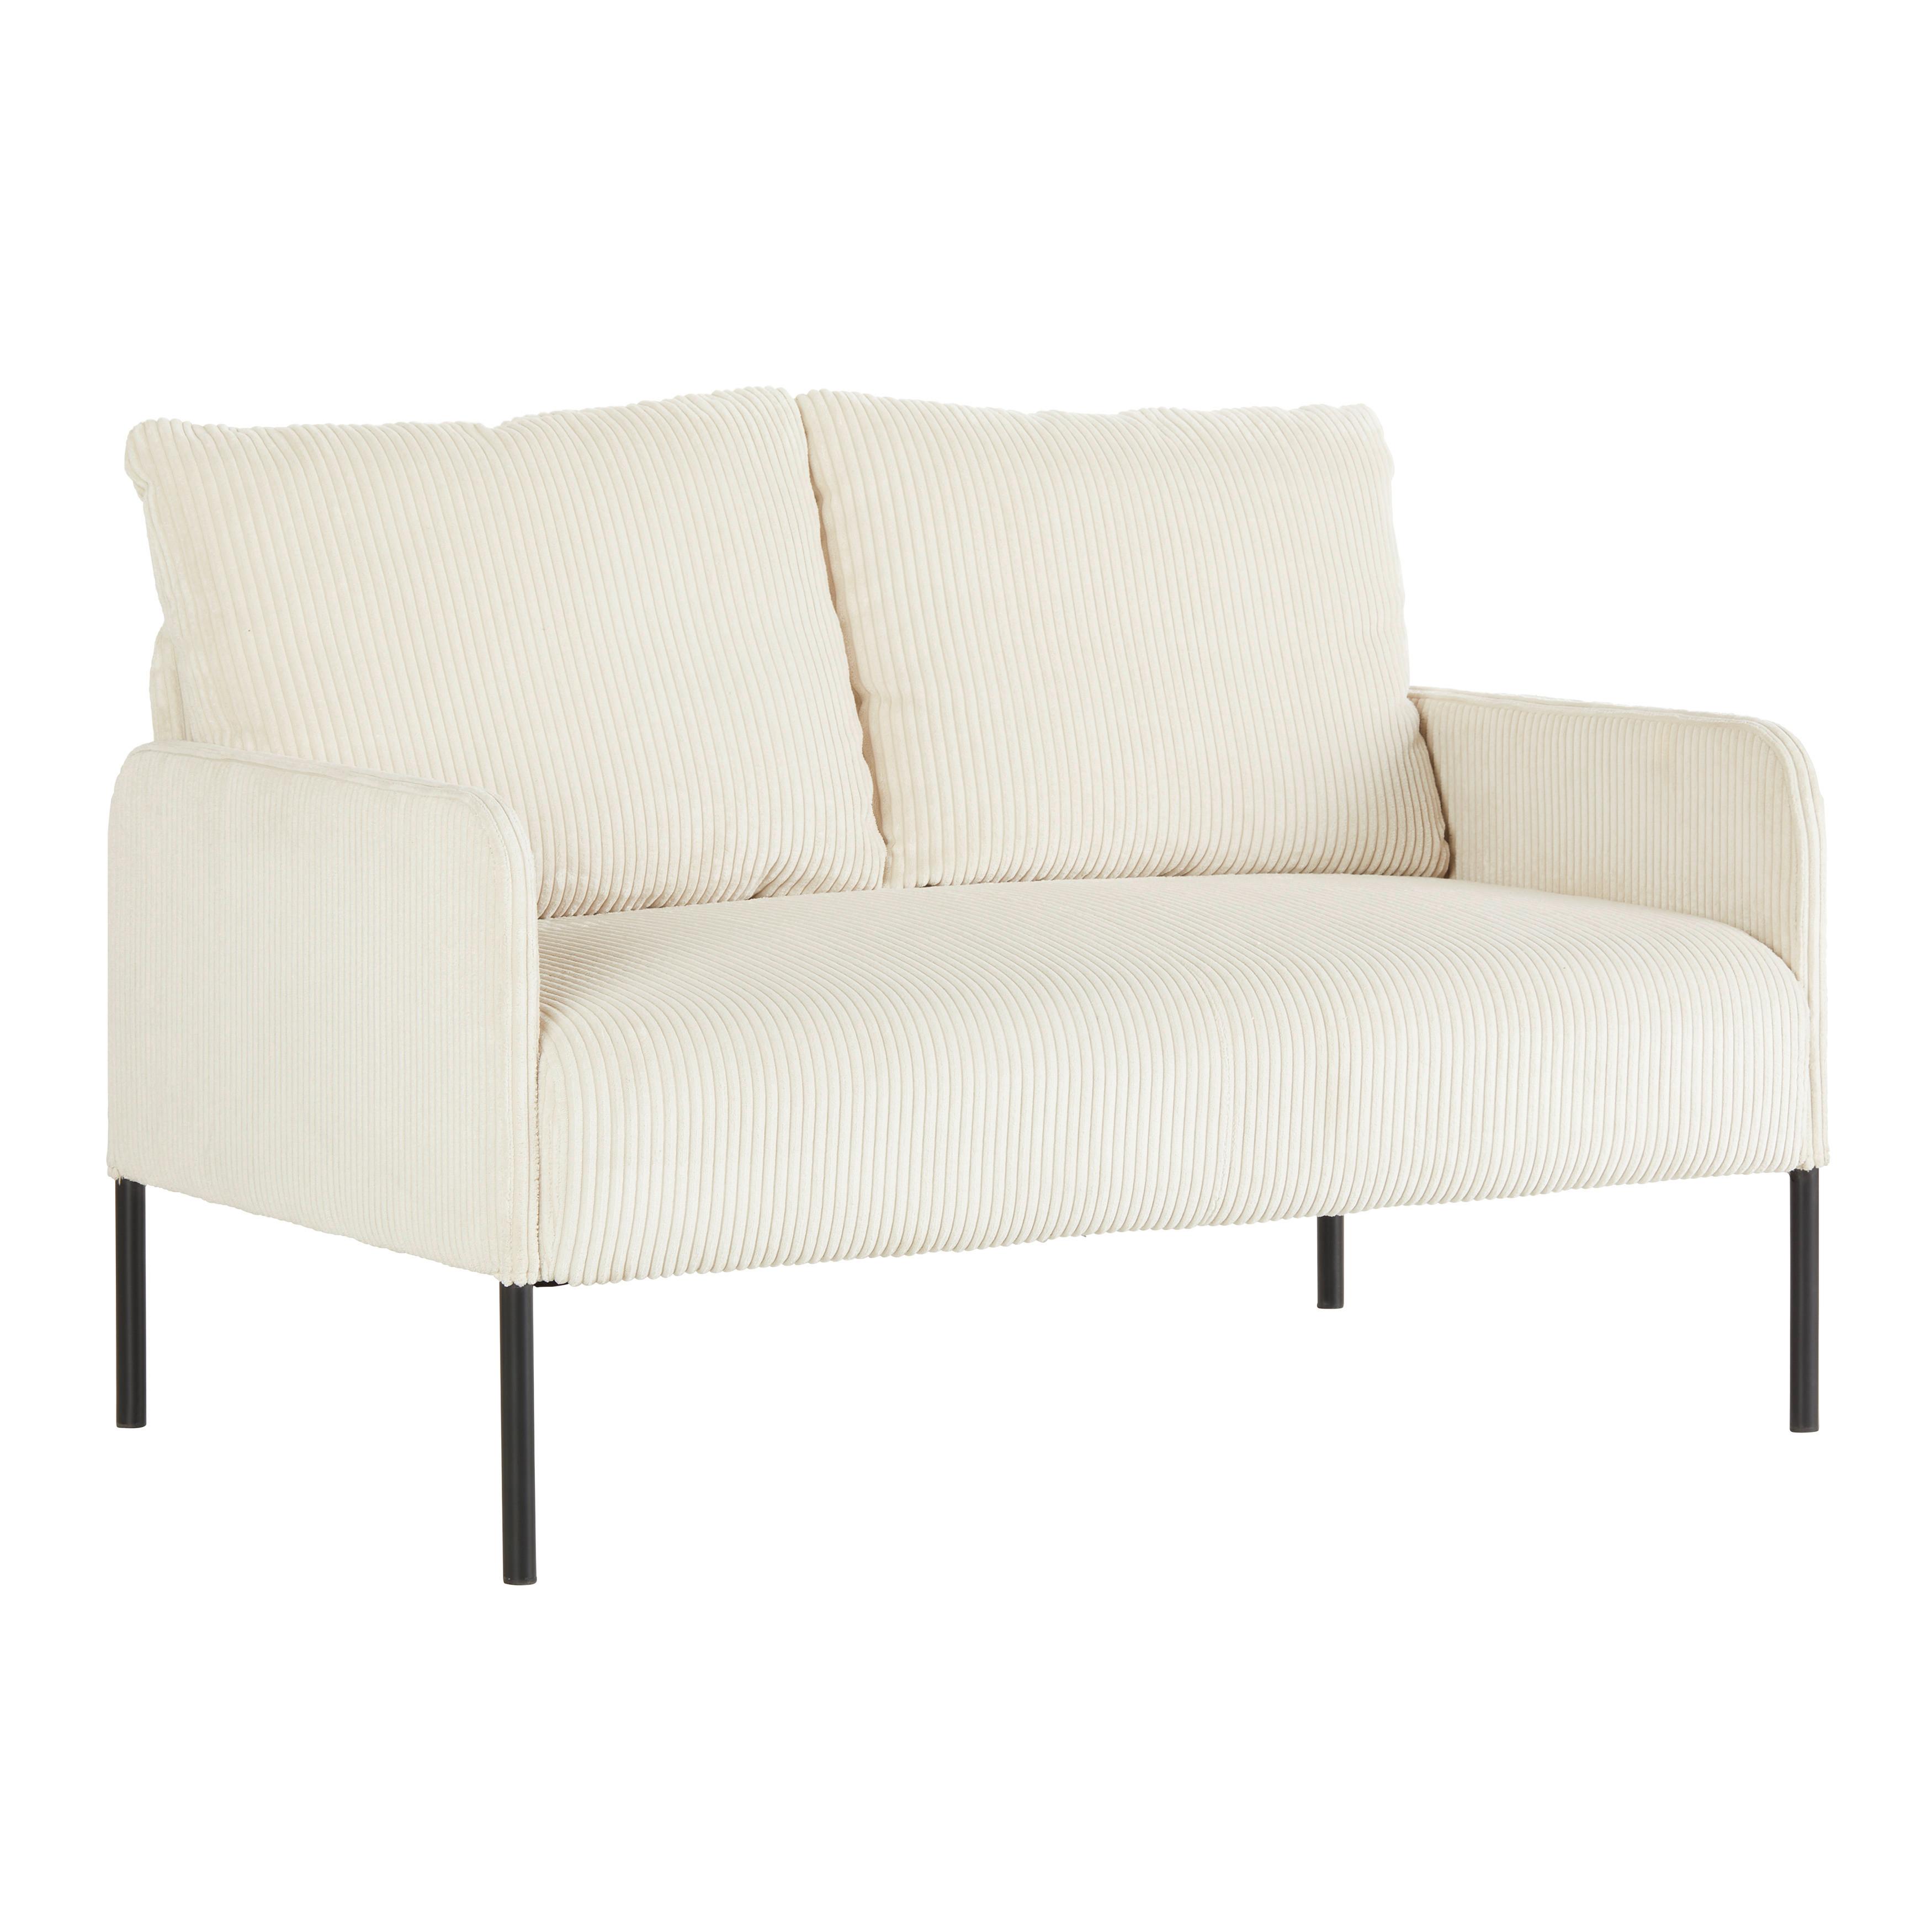 Sofa Cord -Trend- - bež/crna, Modern, metal/tekstil (120/82/79cm) - Premium Living